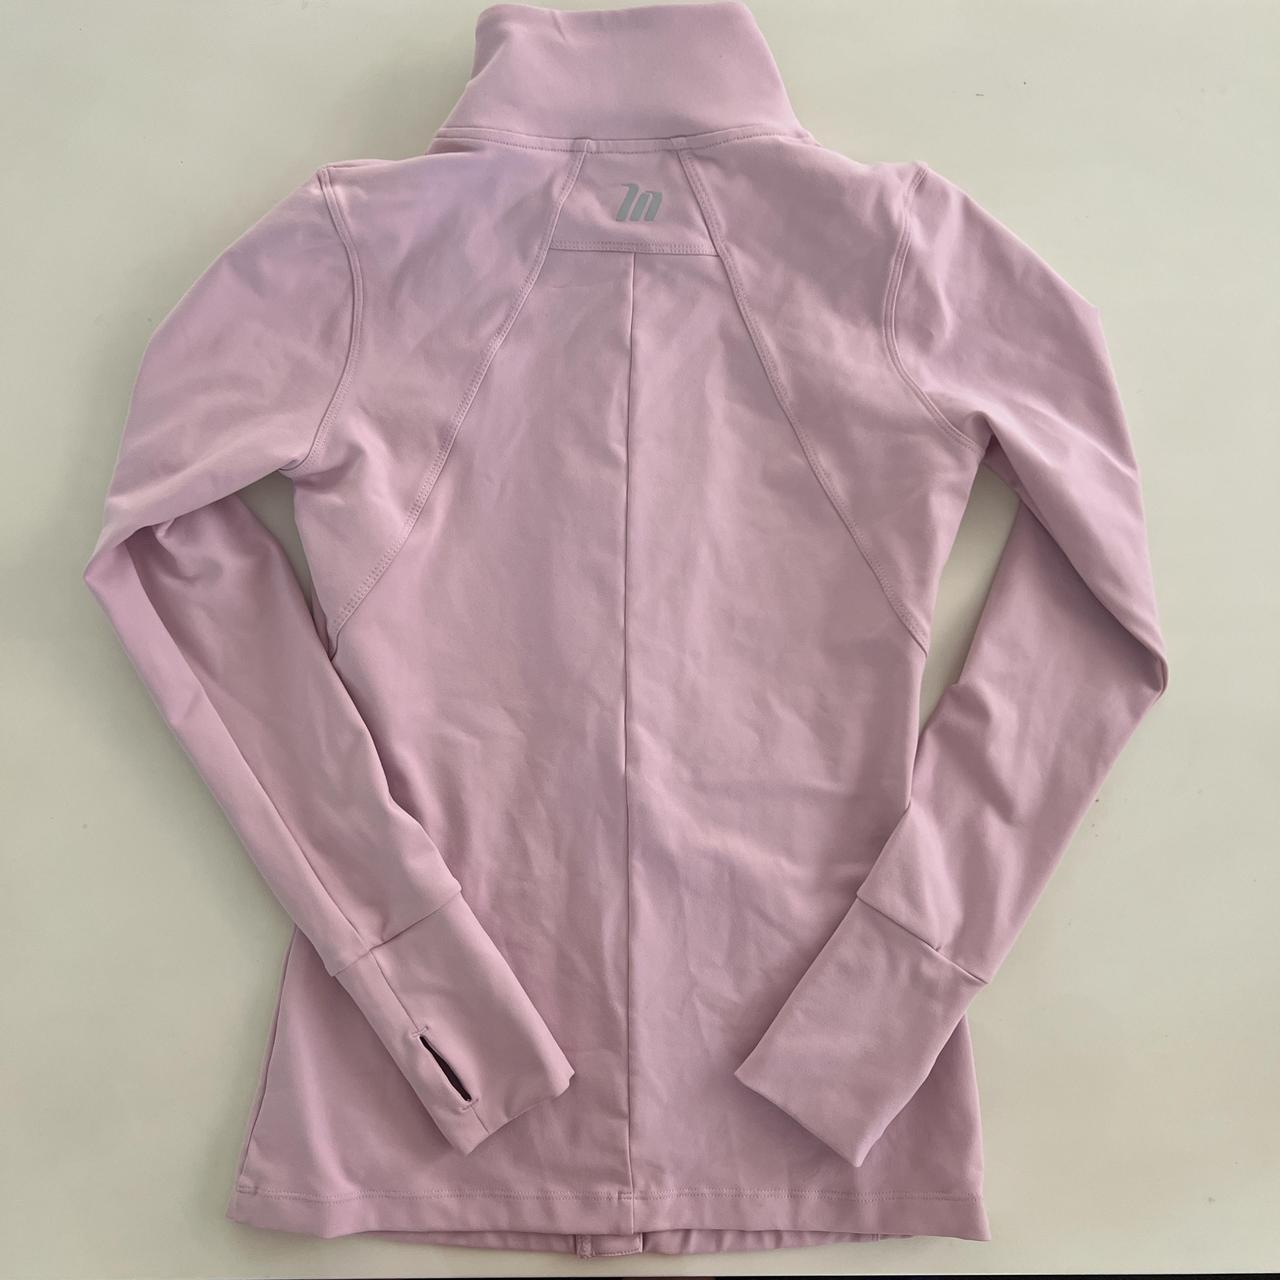 Muscle nation light pink zip up jacket Brand new... - Depop